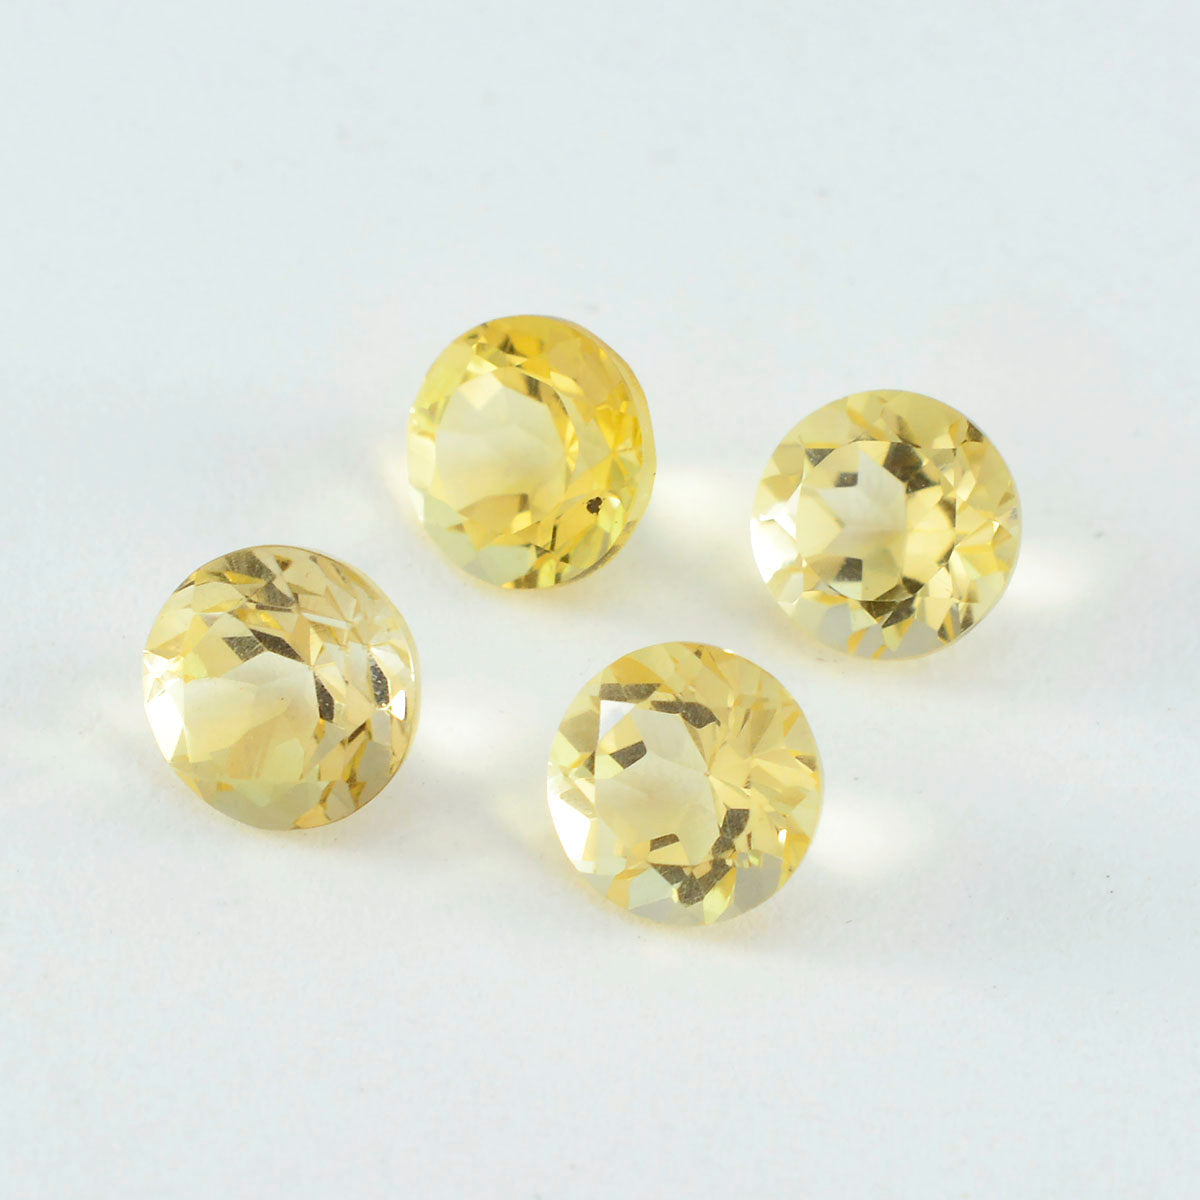 Riyogems 1PC Genuine Yellow Citrine Faceted 12x12 mm Round Shape A1 Quality Loose Gemstone